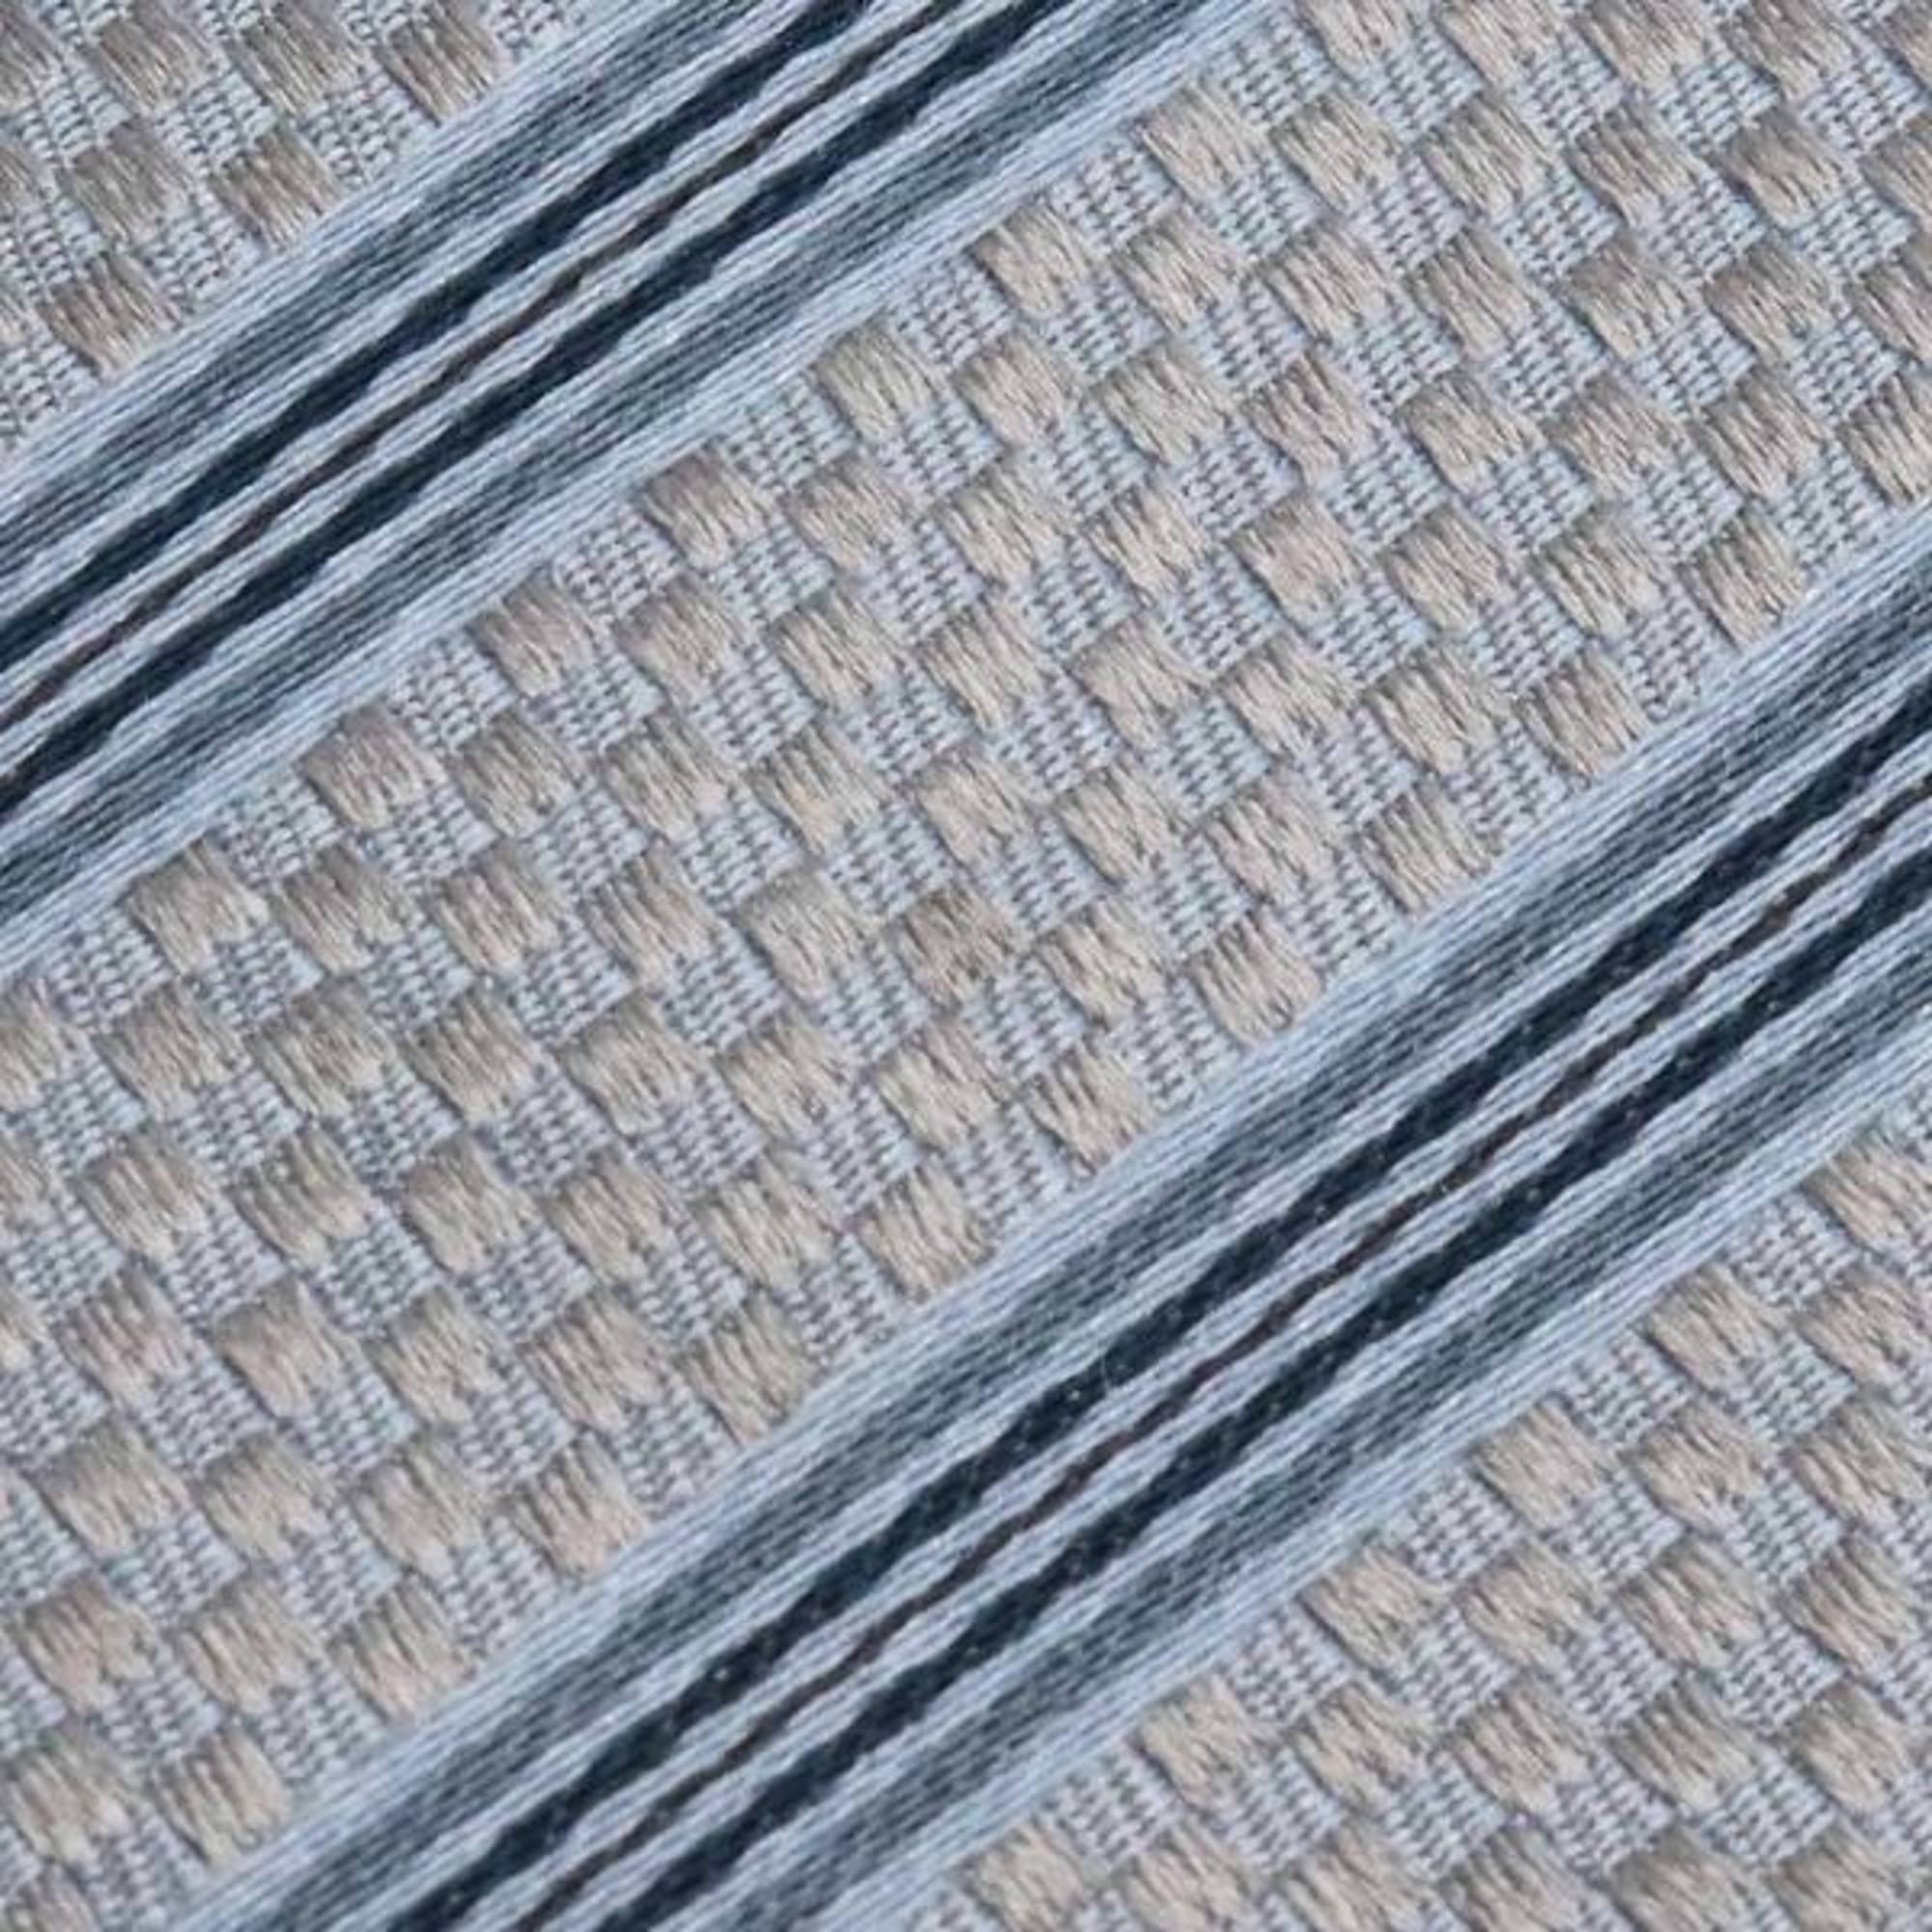 LOUIS VUITTON Louis Vuitton tie striped pattern 100% silk light blue